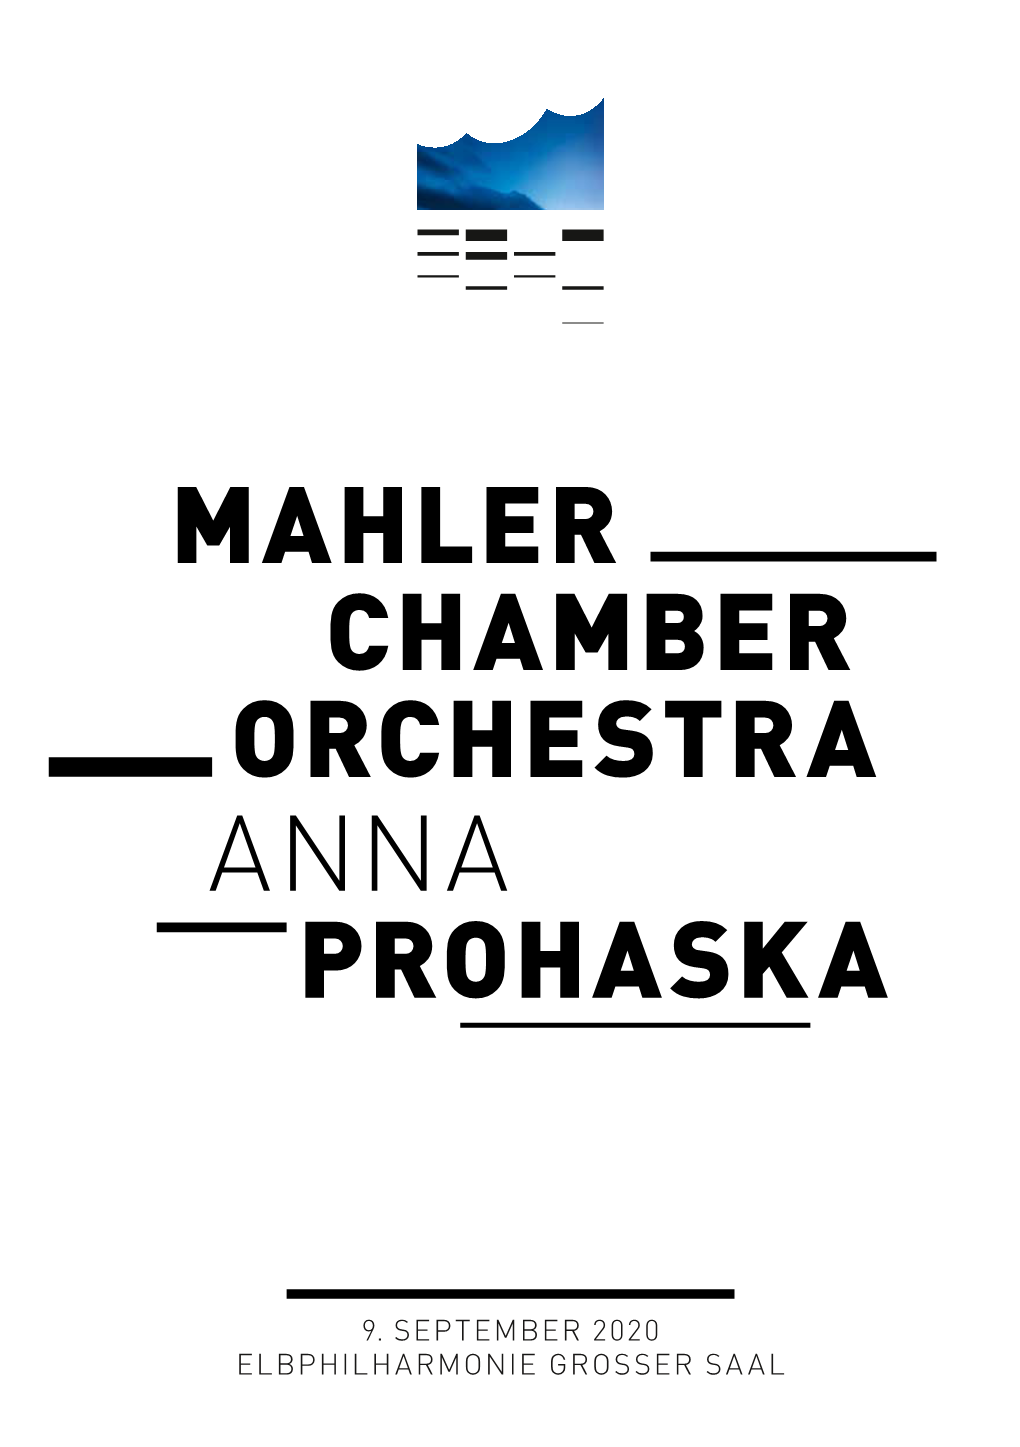 Mahler Chamber Orchestra Prohaska